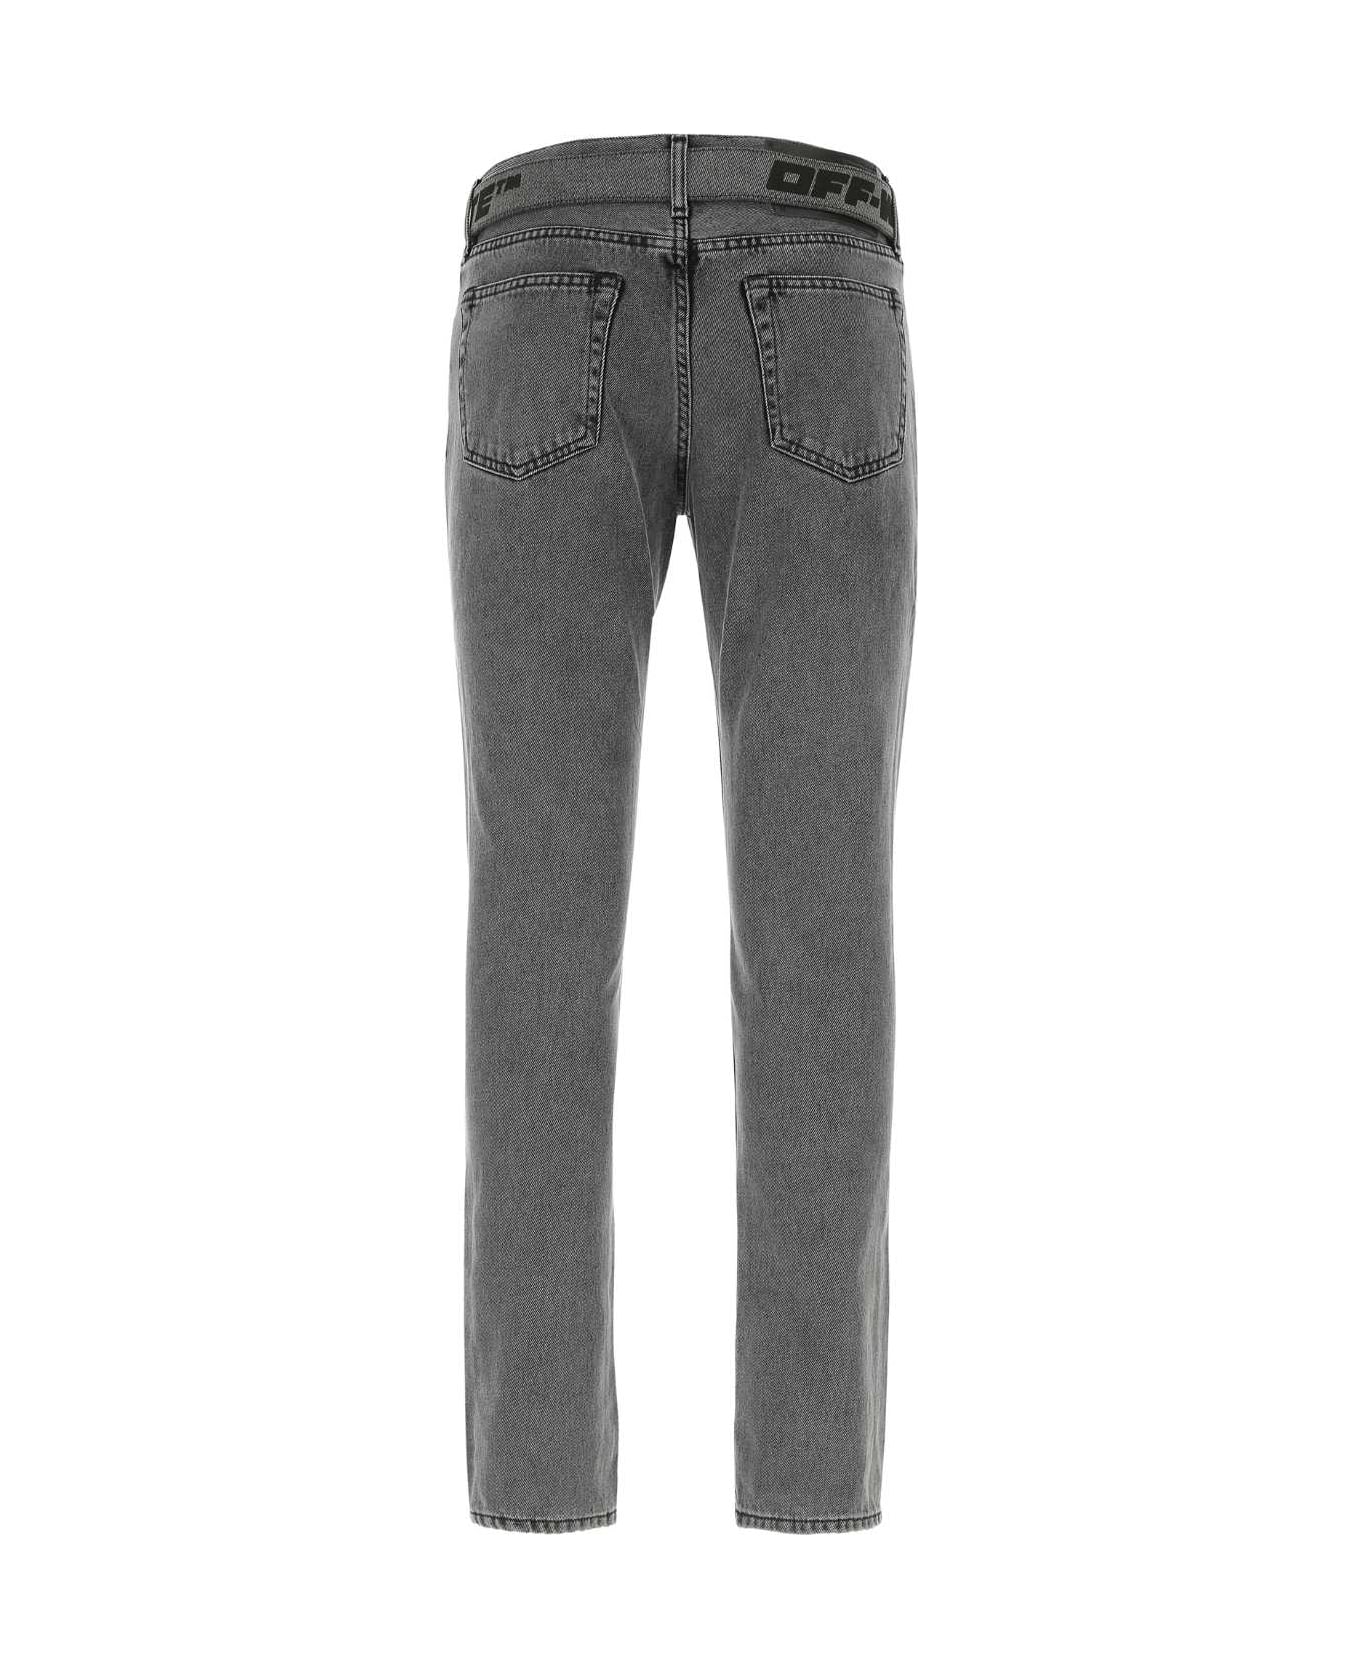 Off-White Black Denim Jeans - 1210 デニム